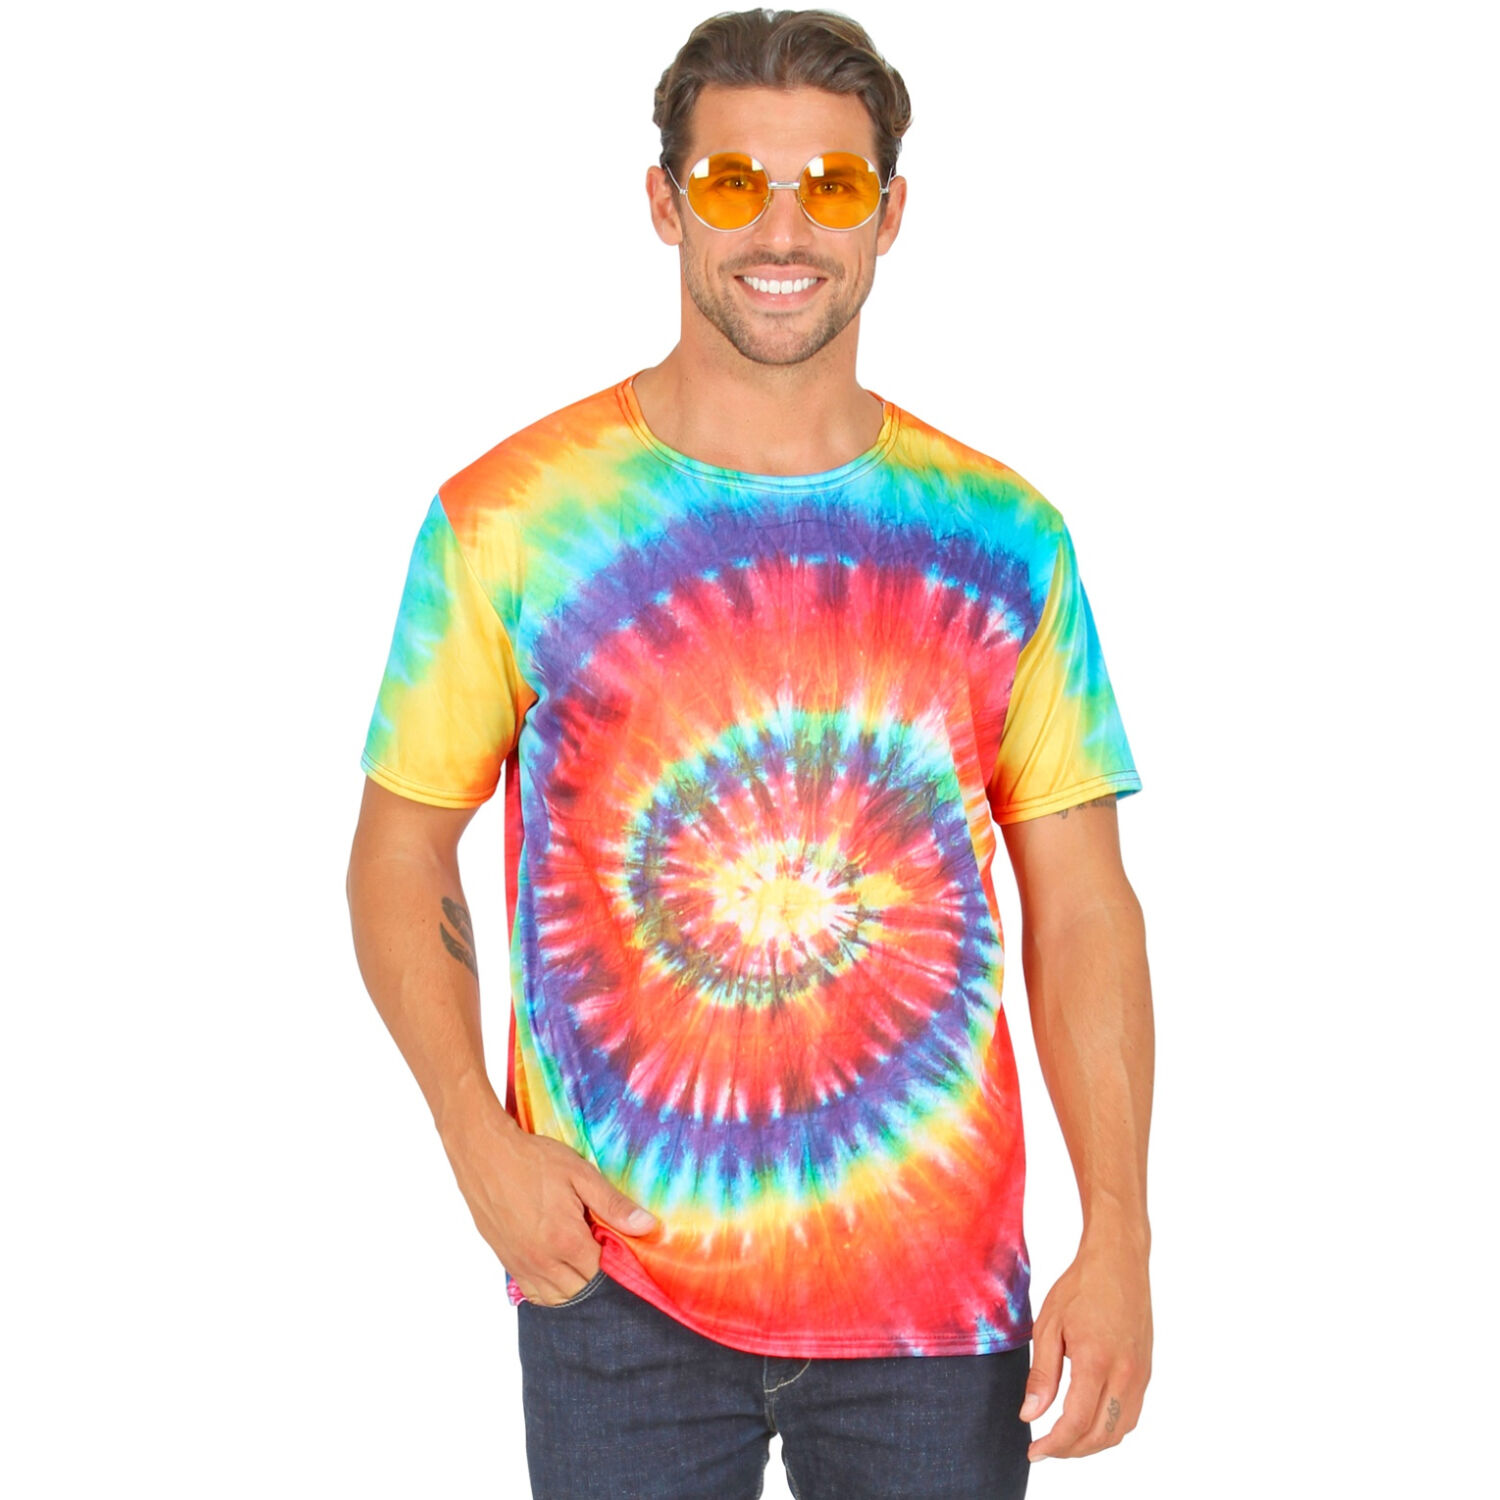 NEU Herren-Kostüm Hippie-Hemd in Batikoptik, Größe S-M